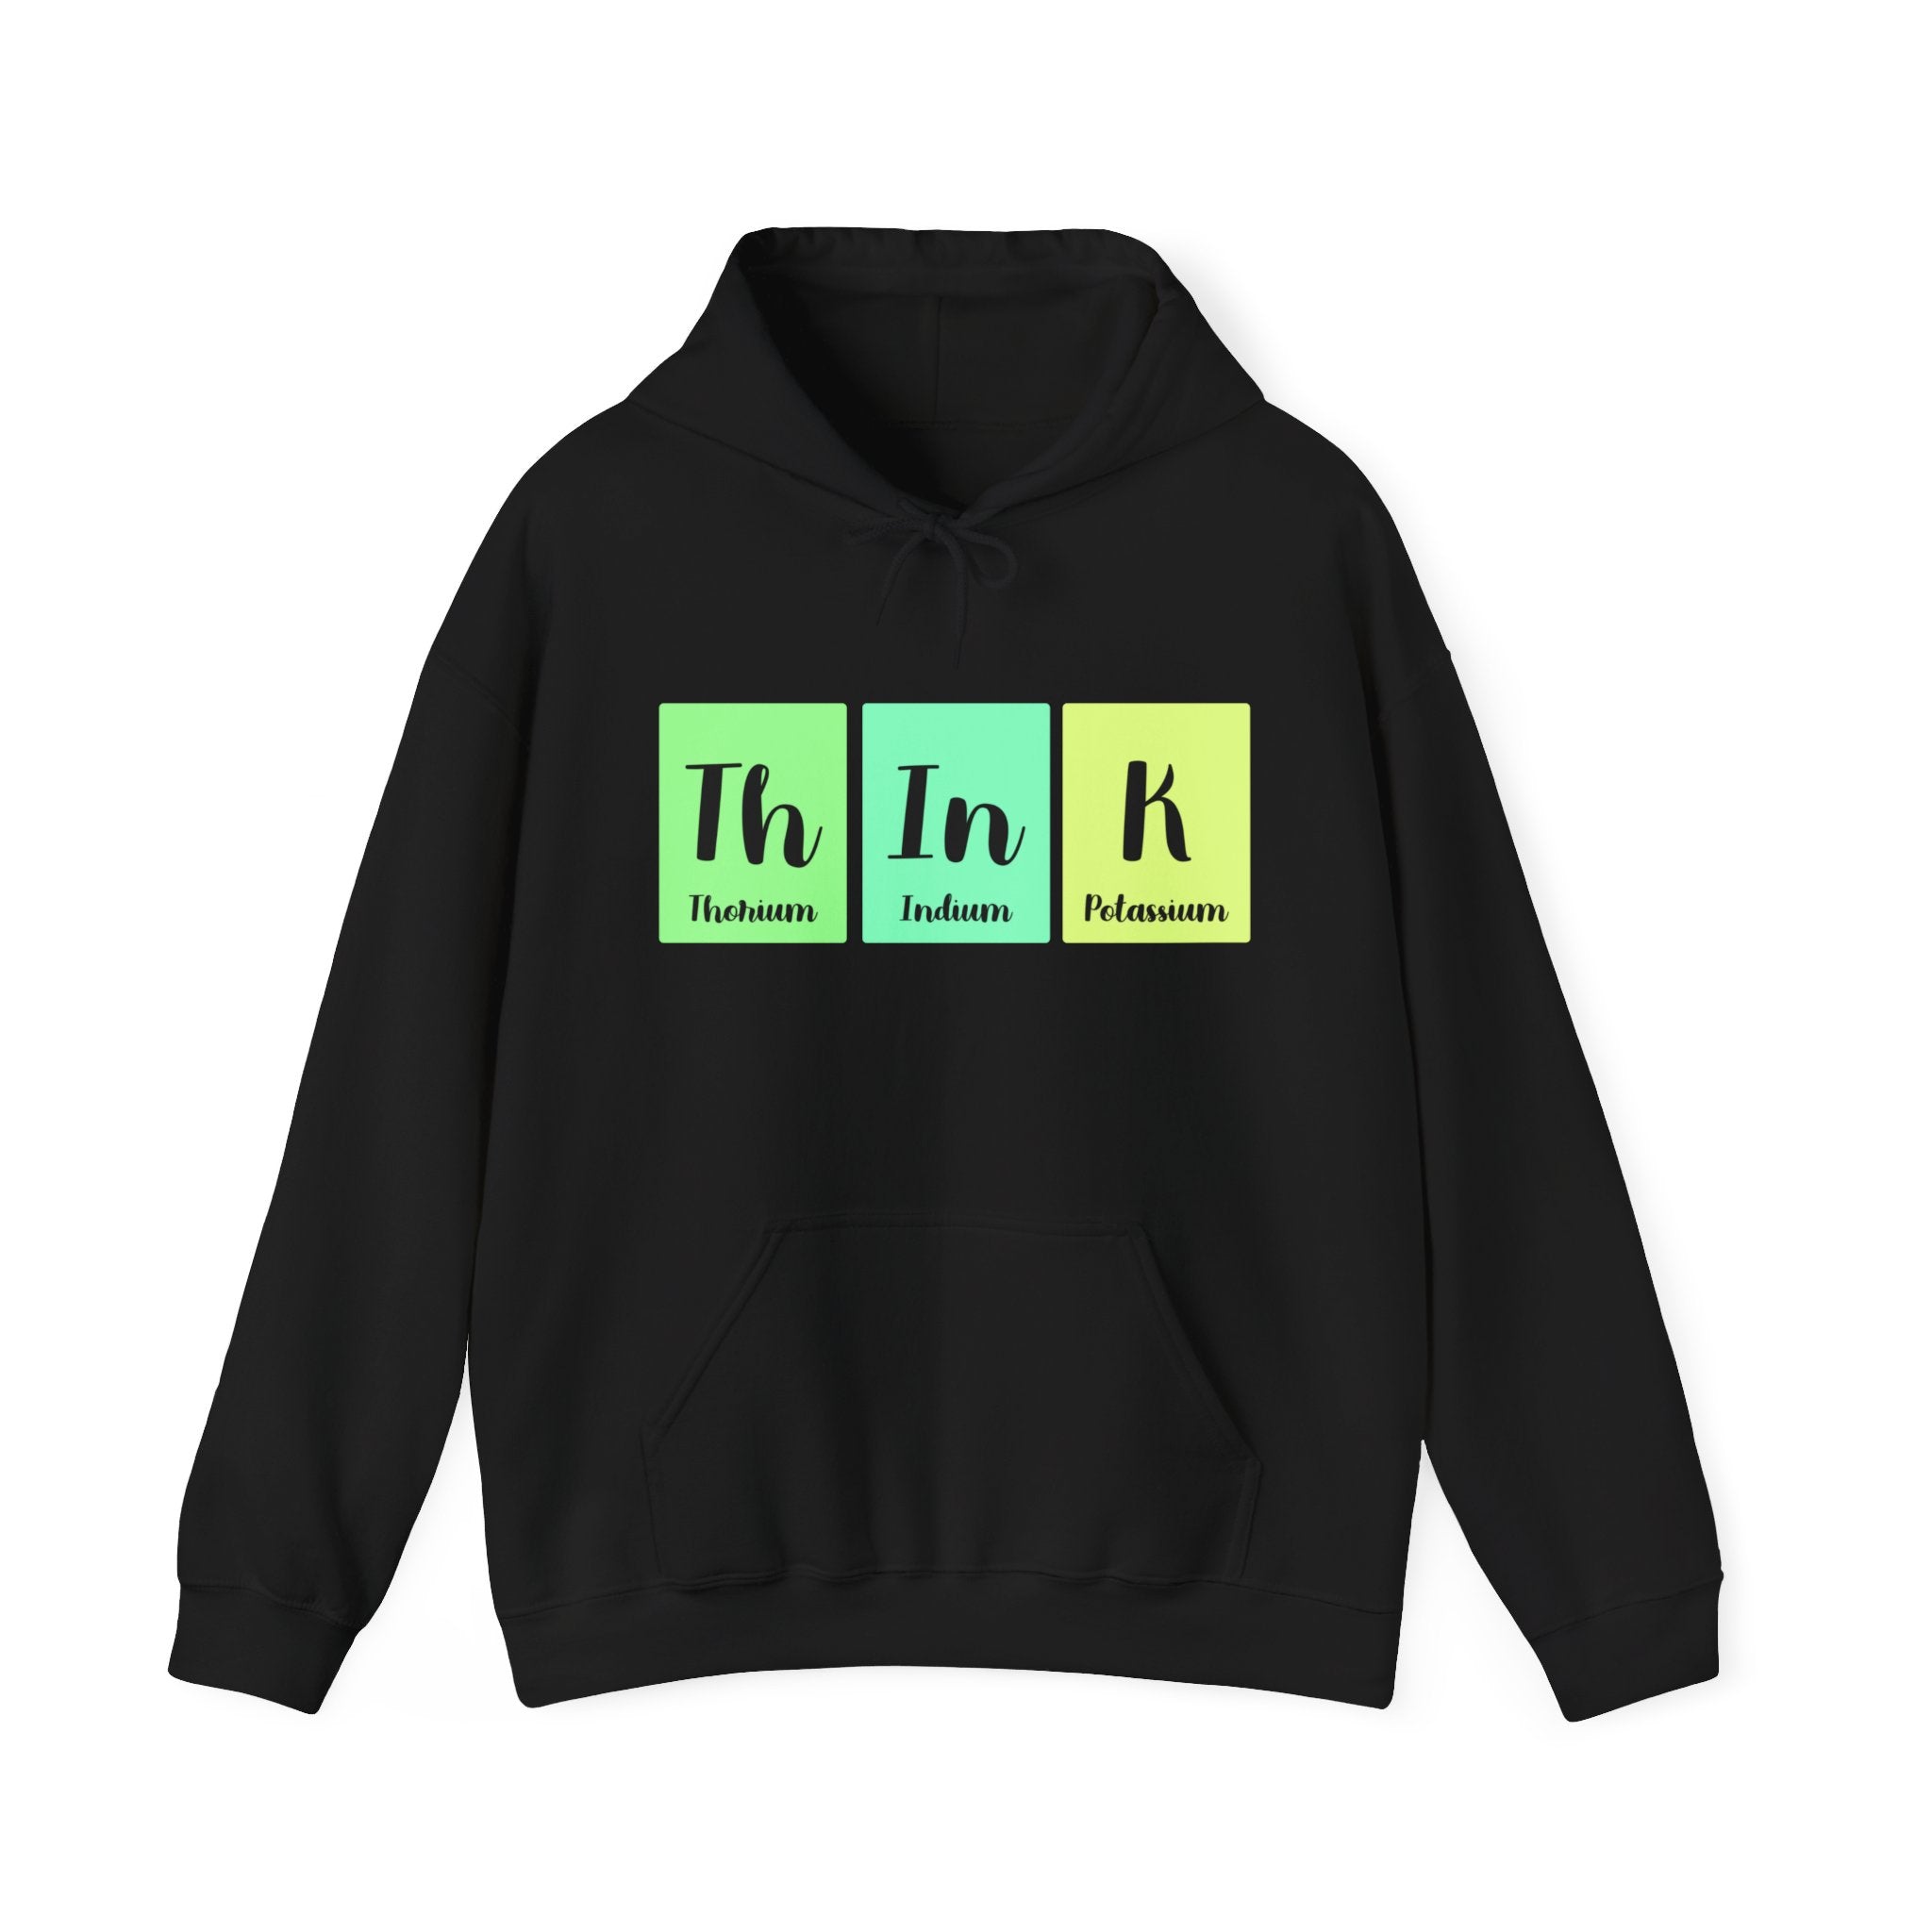 Th-In-K - Hooded Sweatshirt